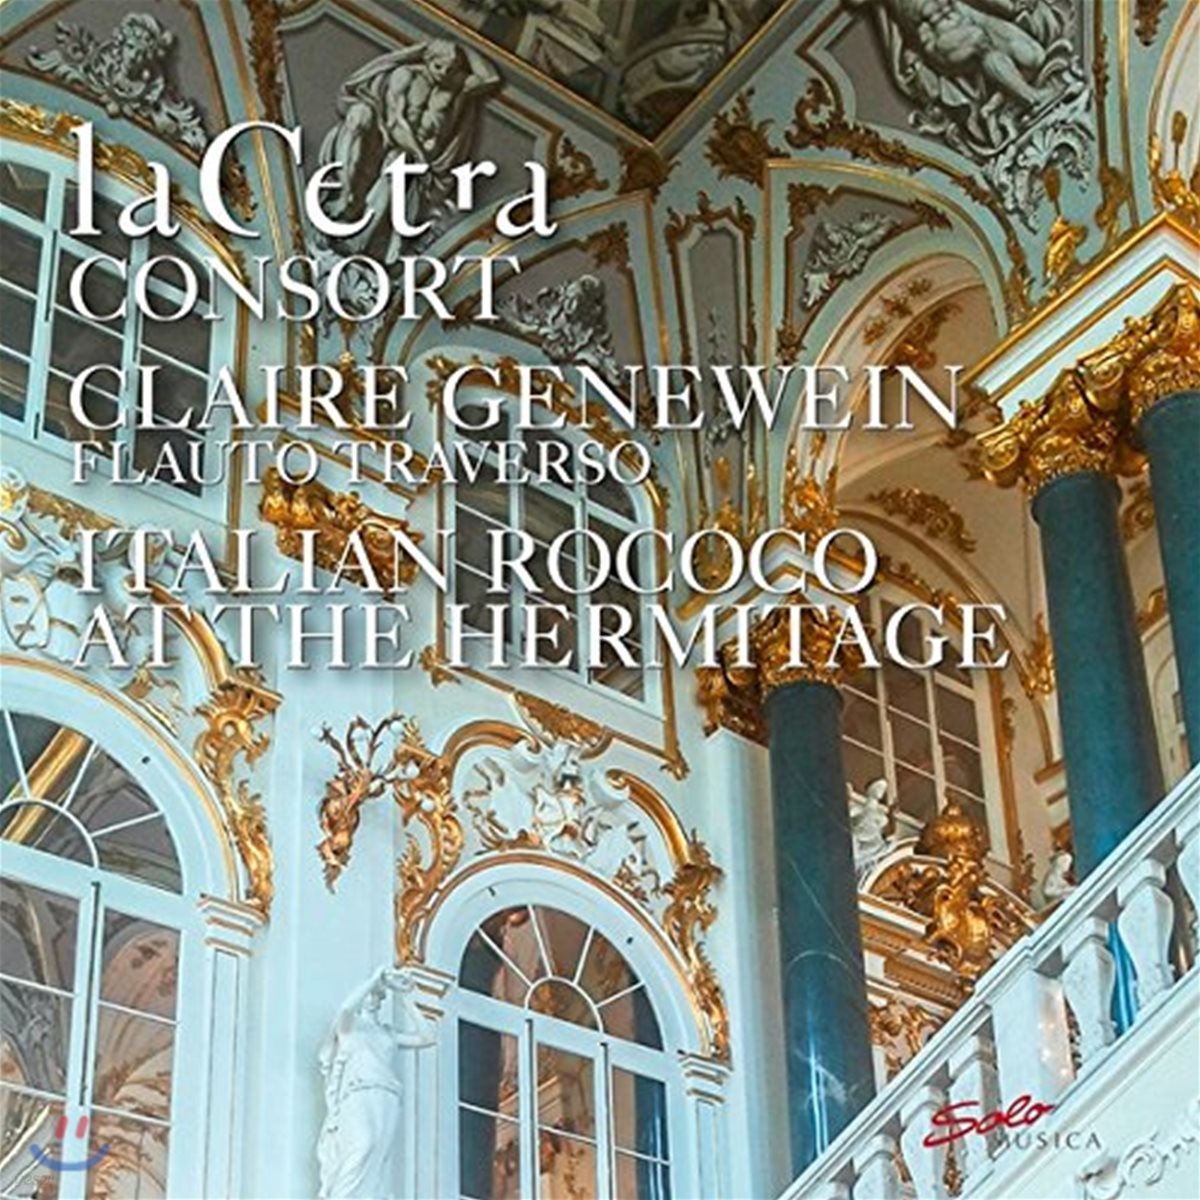 La Cetra Consort 에르미타쥬의 이탈리아 로코코 음악 - 라 체트라 콘소트, 클레어 게네바인 (Italian Rococo at the Hermitage)